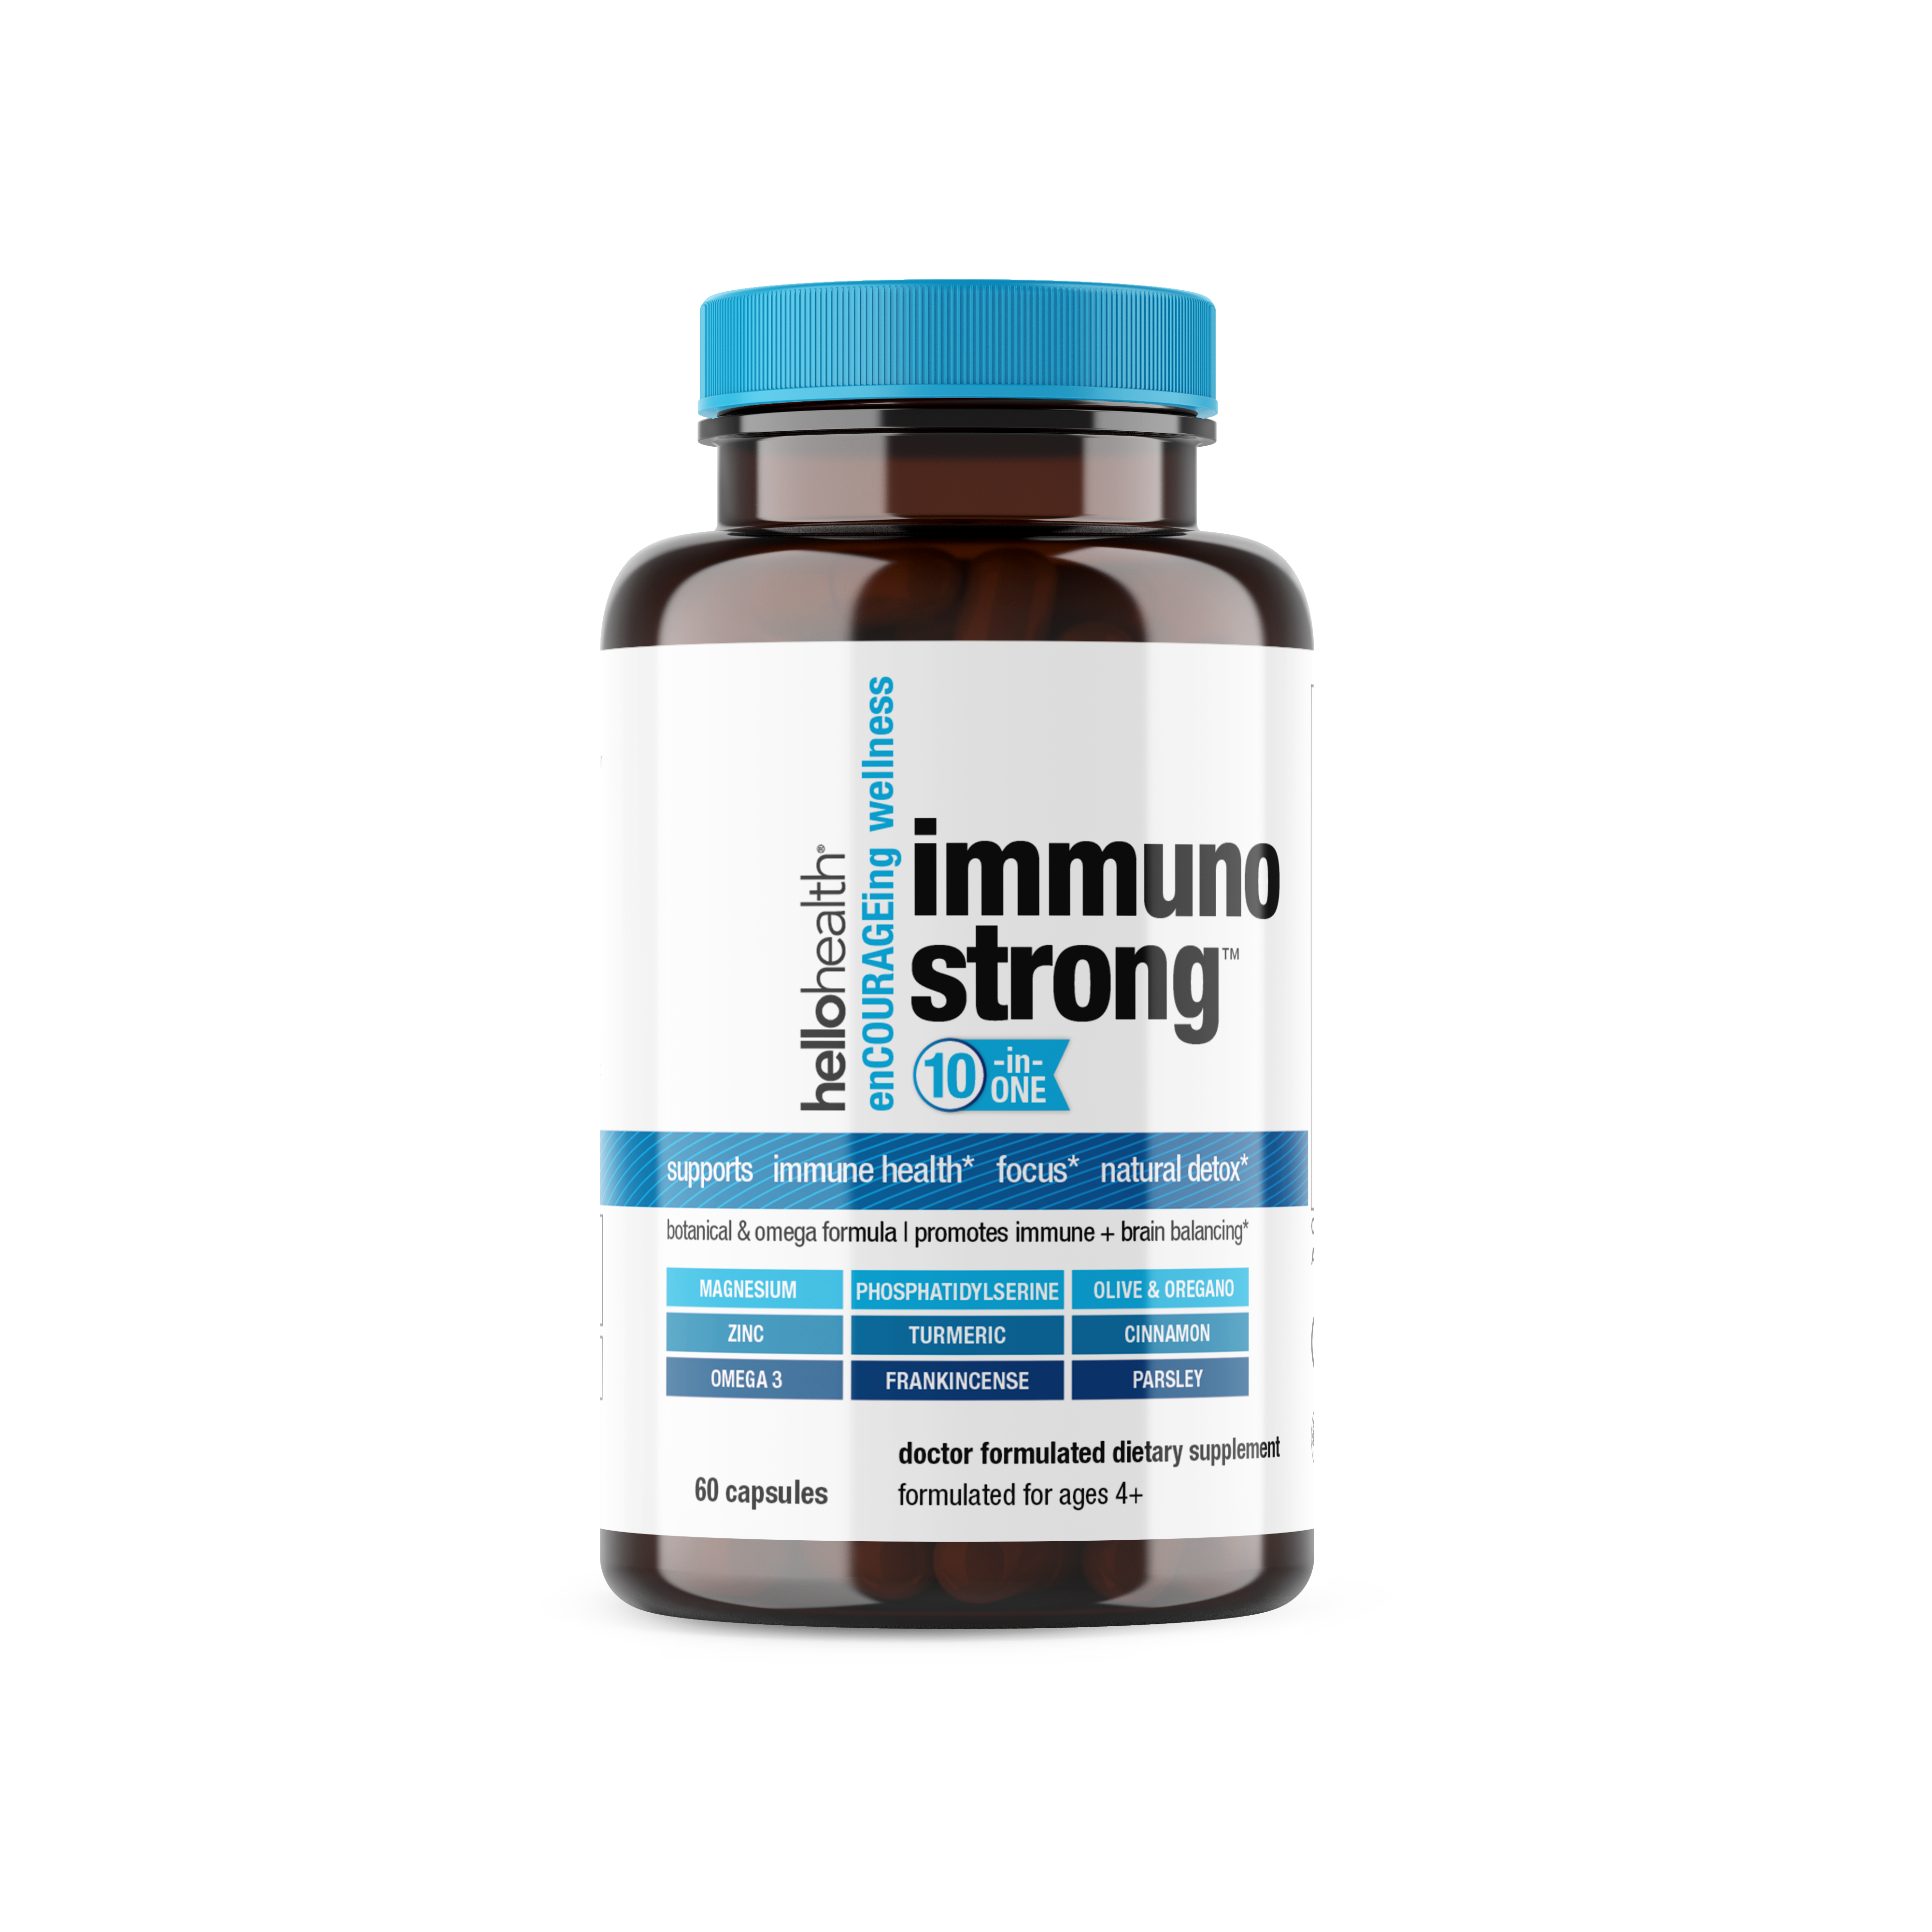 10-in-1 Immune Support Natural & Detox capsules